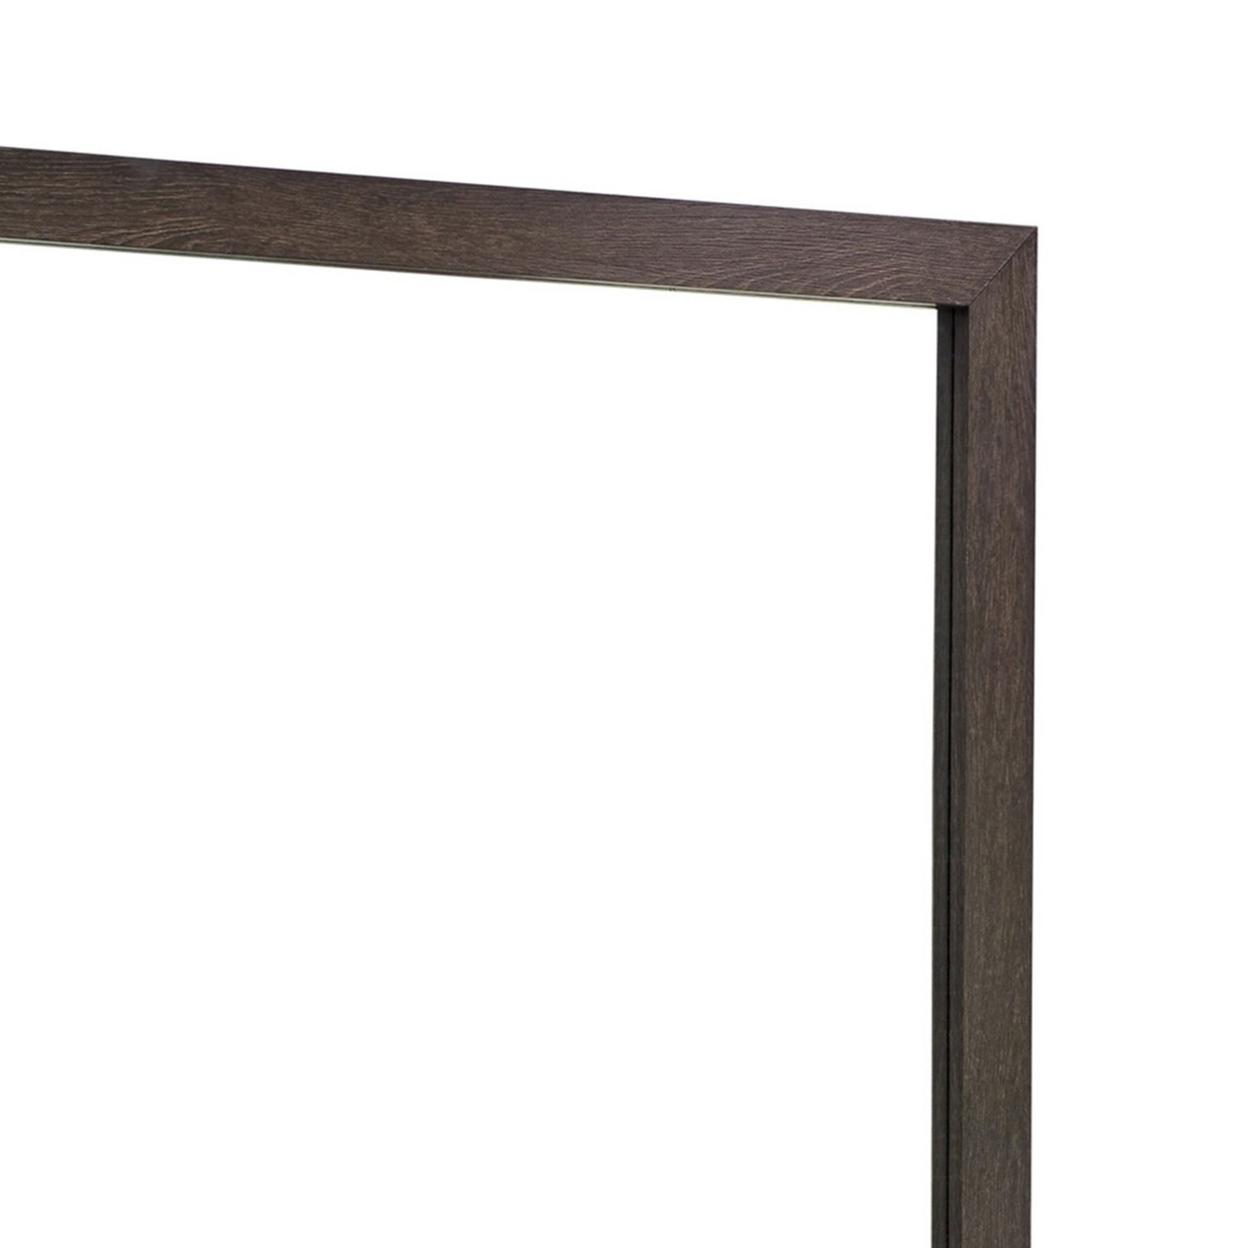 Mirror With Wooden Frame And Mounting Hardware, Dark Brown- Saltoro Sherpi